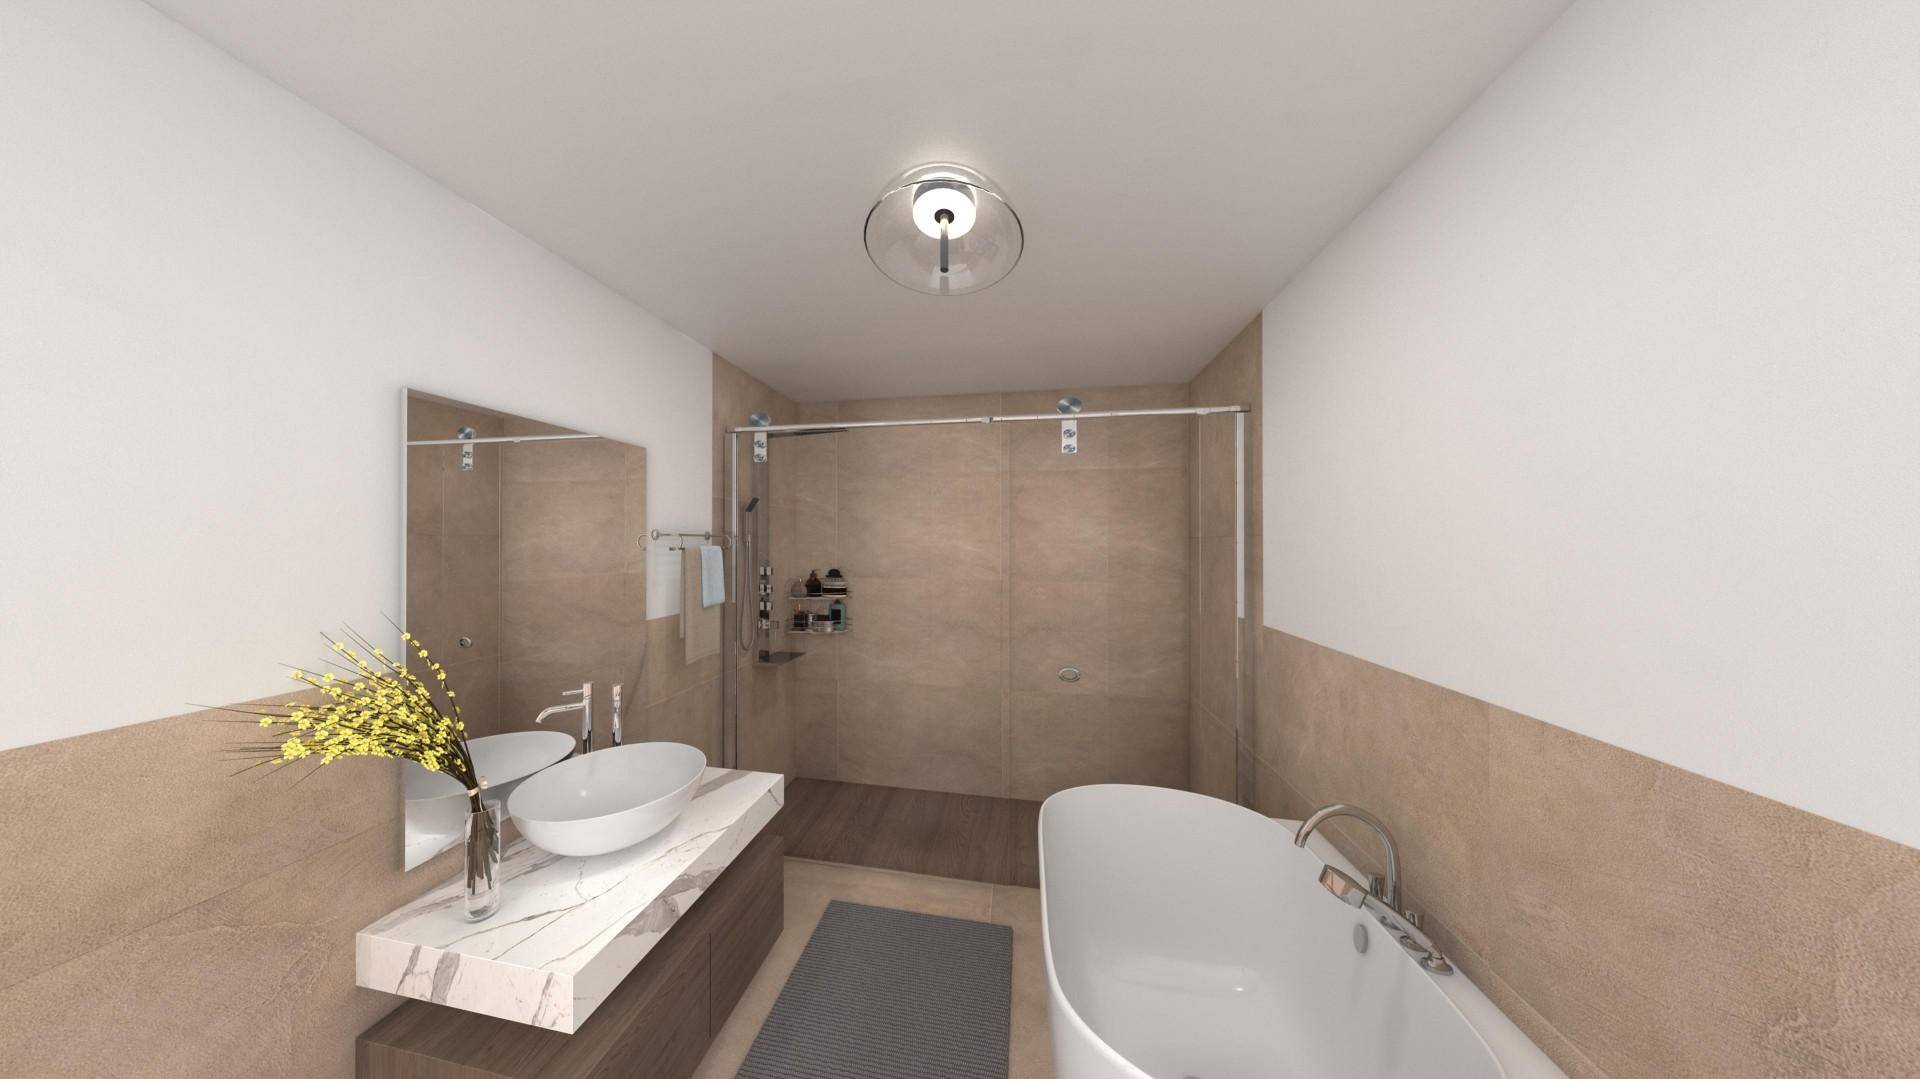 Haus - Badezimmer 2 - Visualisierung